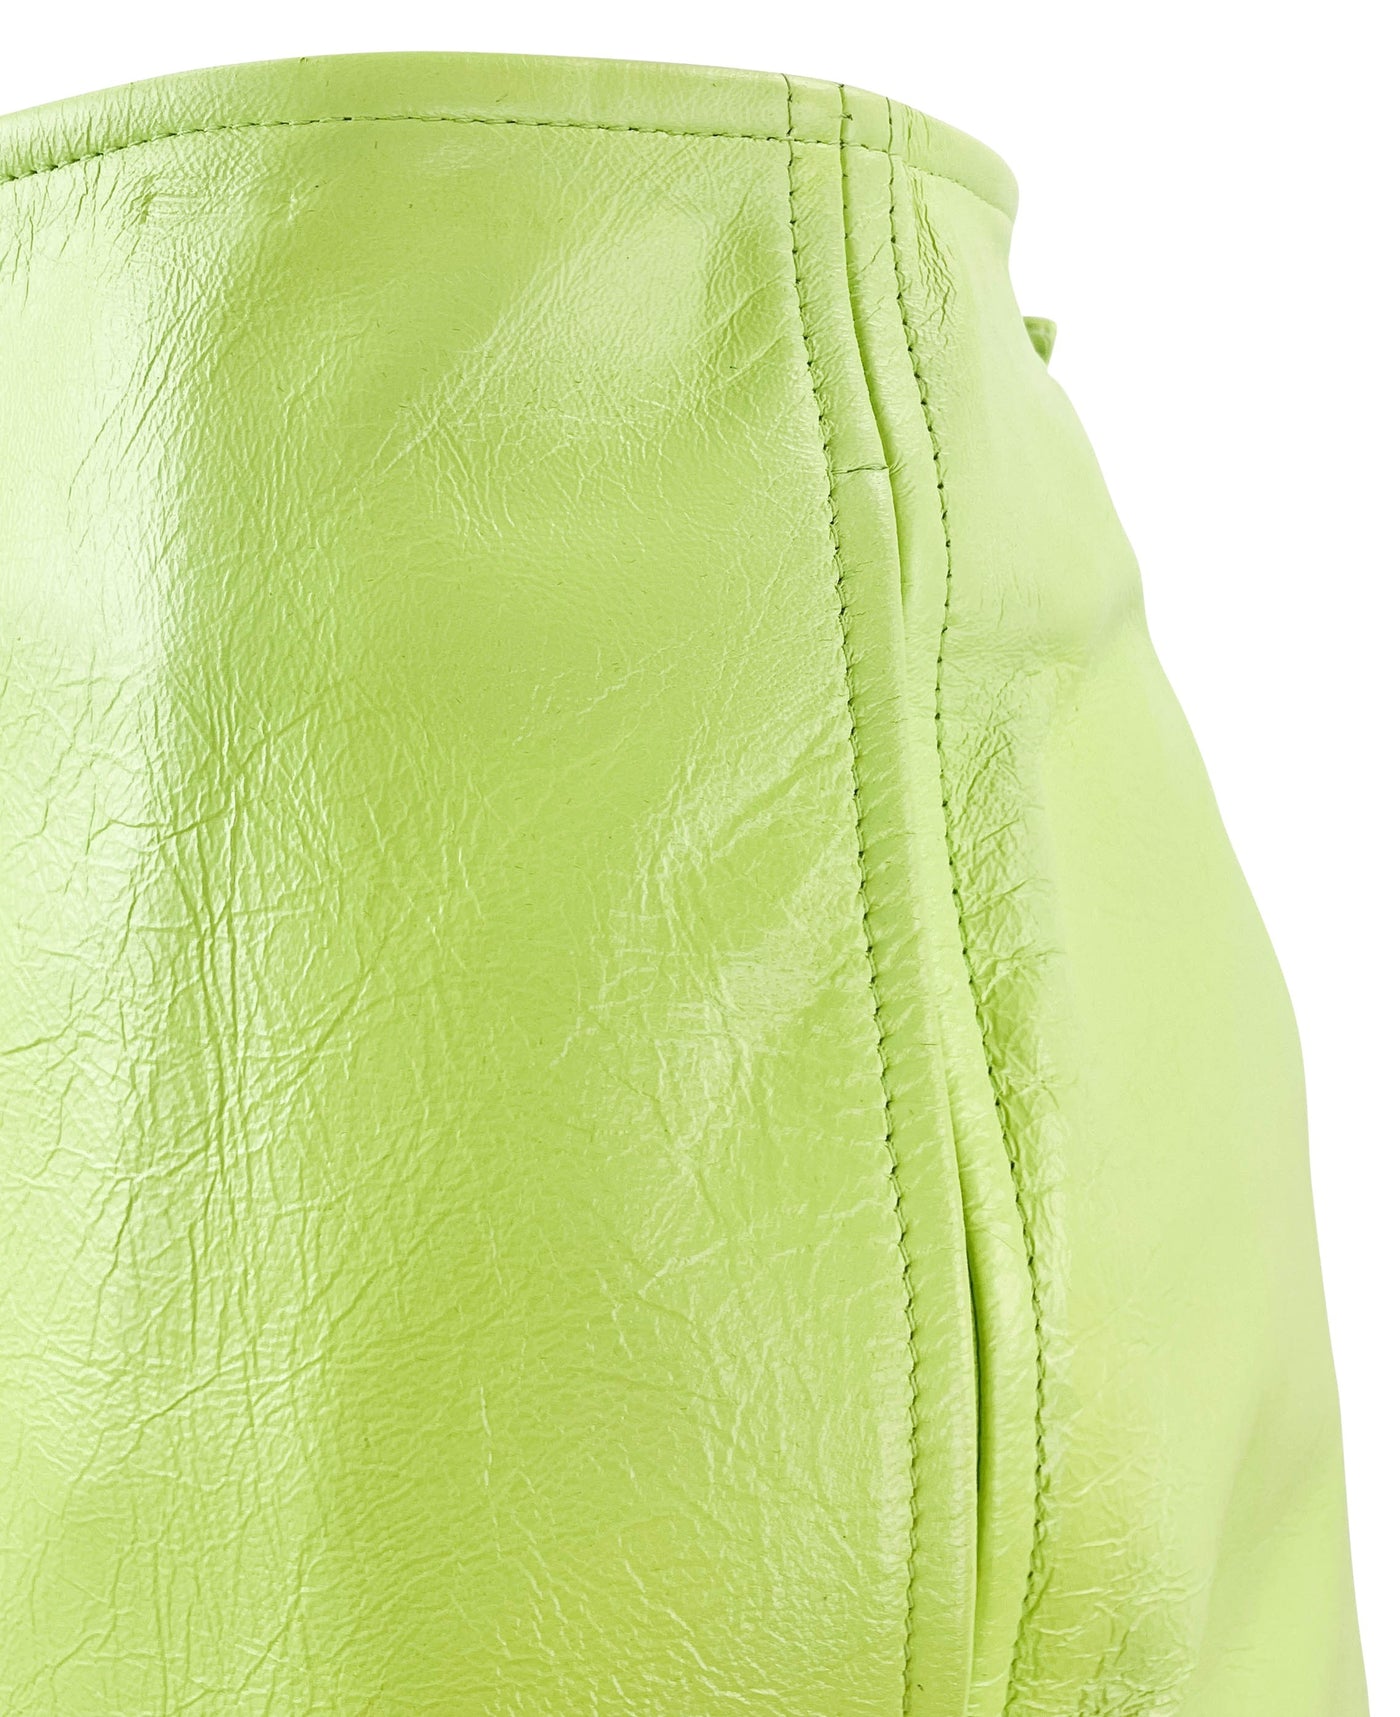 Bottega Veneta Shiny Textured Leather Skirt in Fennel - Discounts on Bottega Veneta at UAL